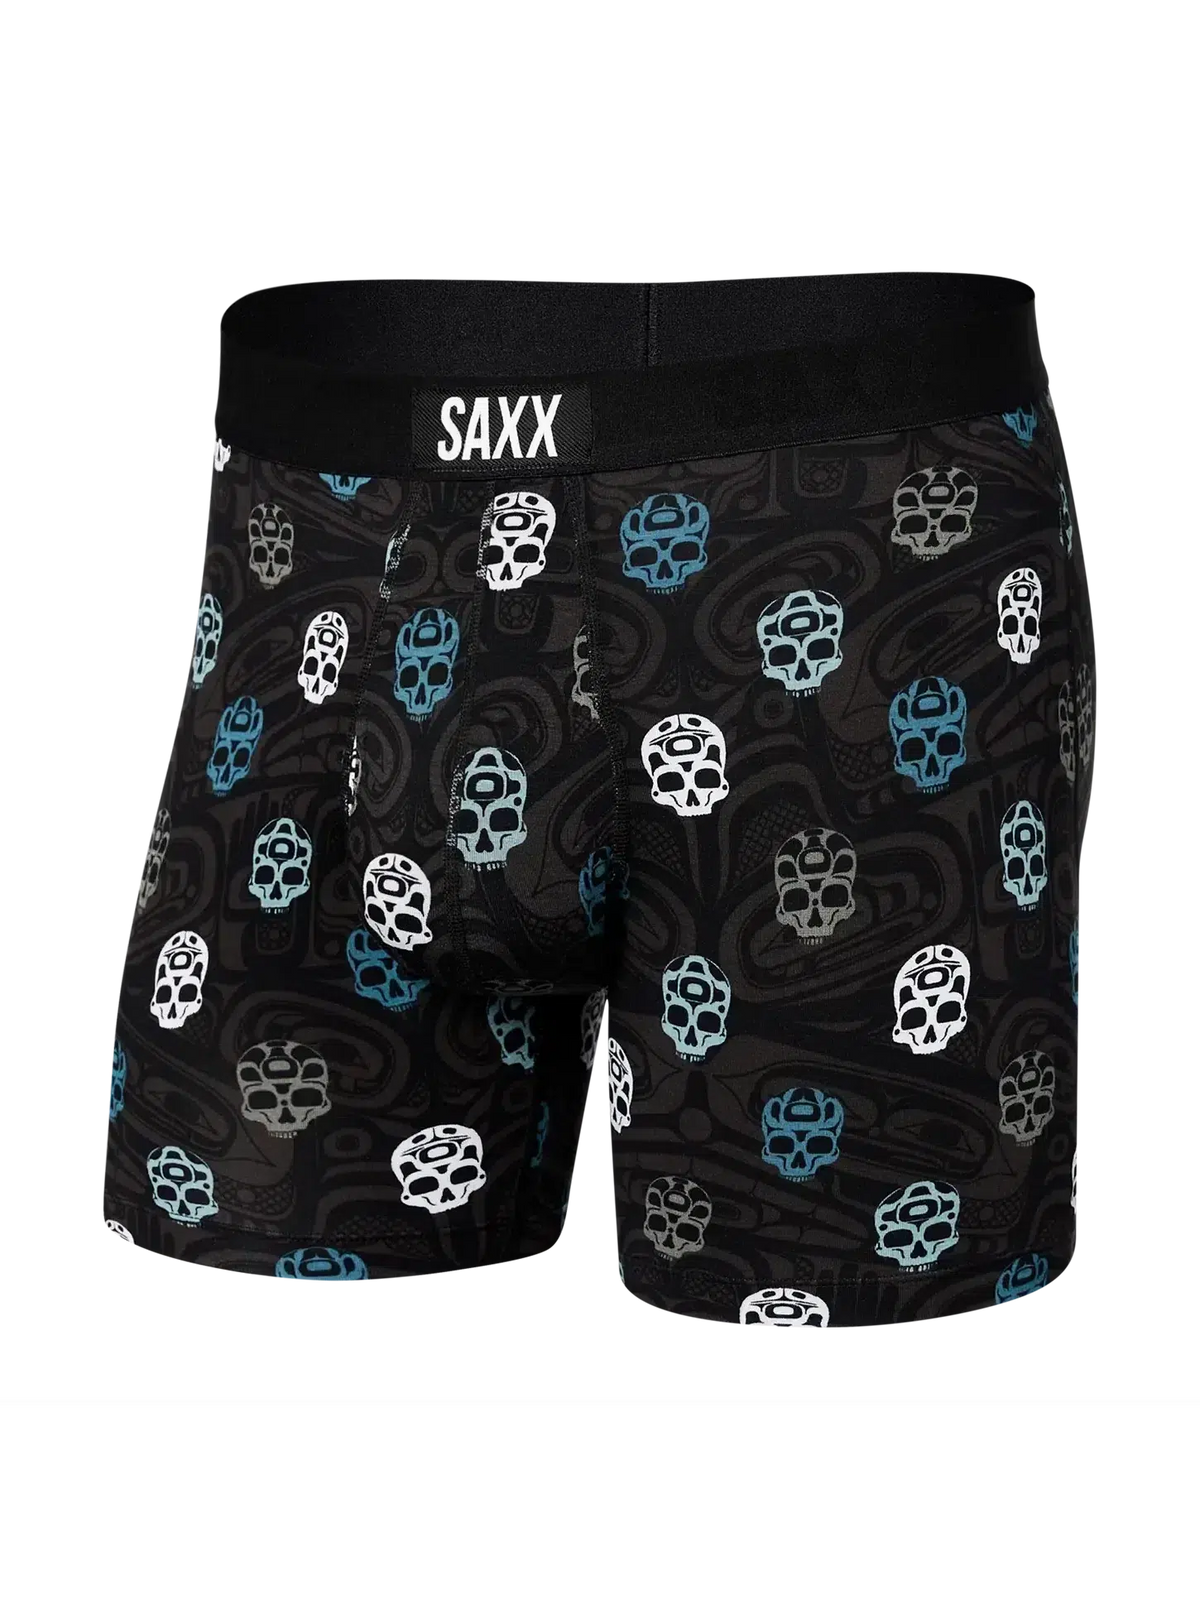 SAXX Ultra Black Skulls Boxers